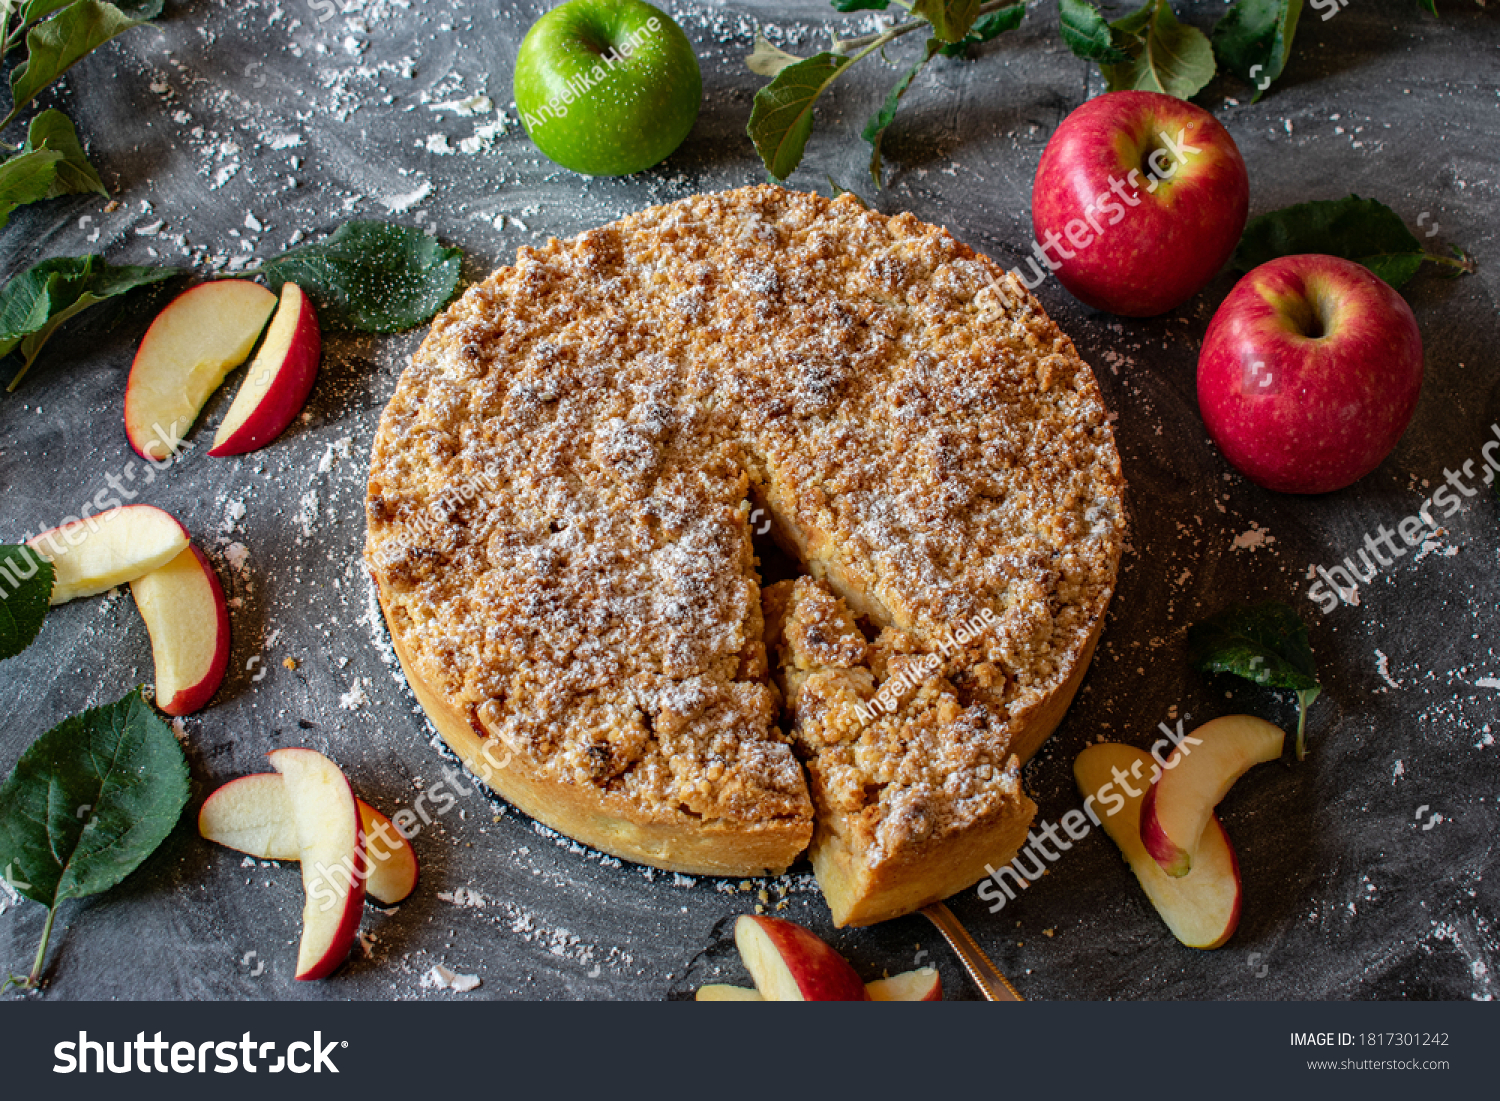 Apple crumble cake on dark background #1817301242